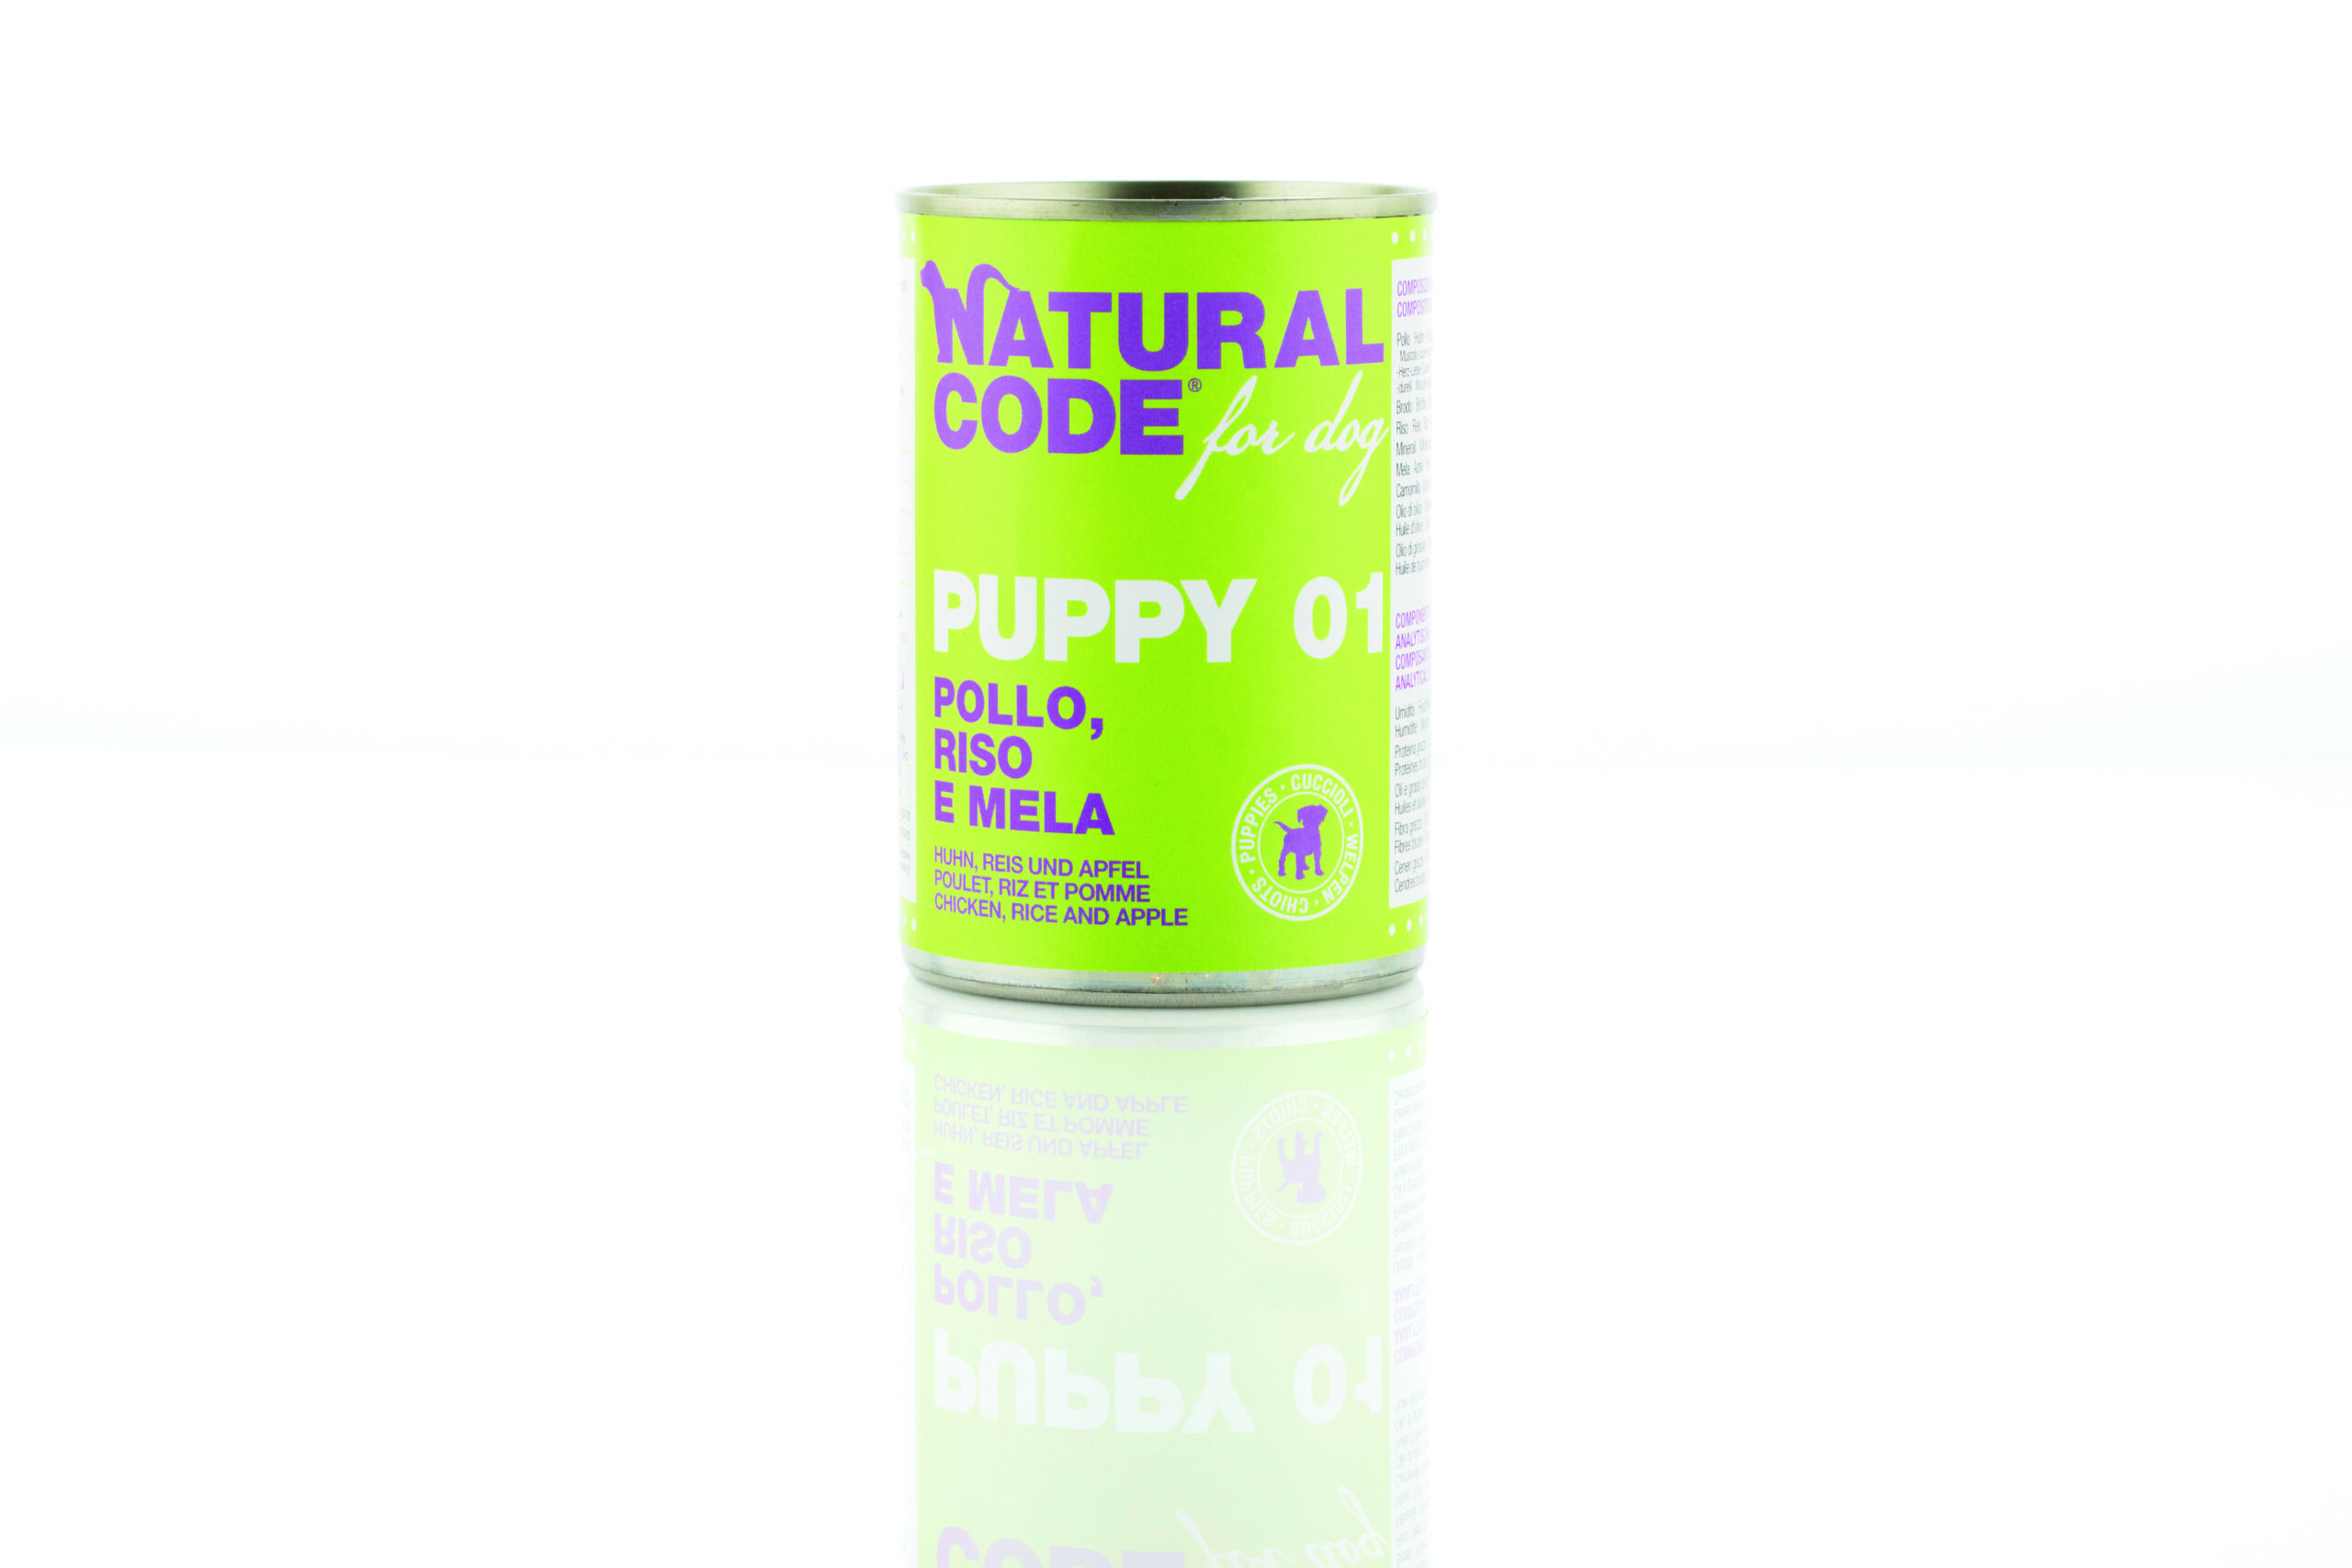 Natural code puppy 01